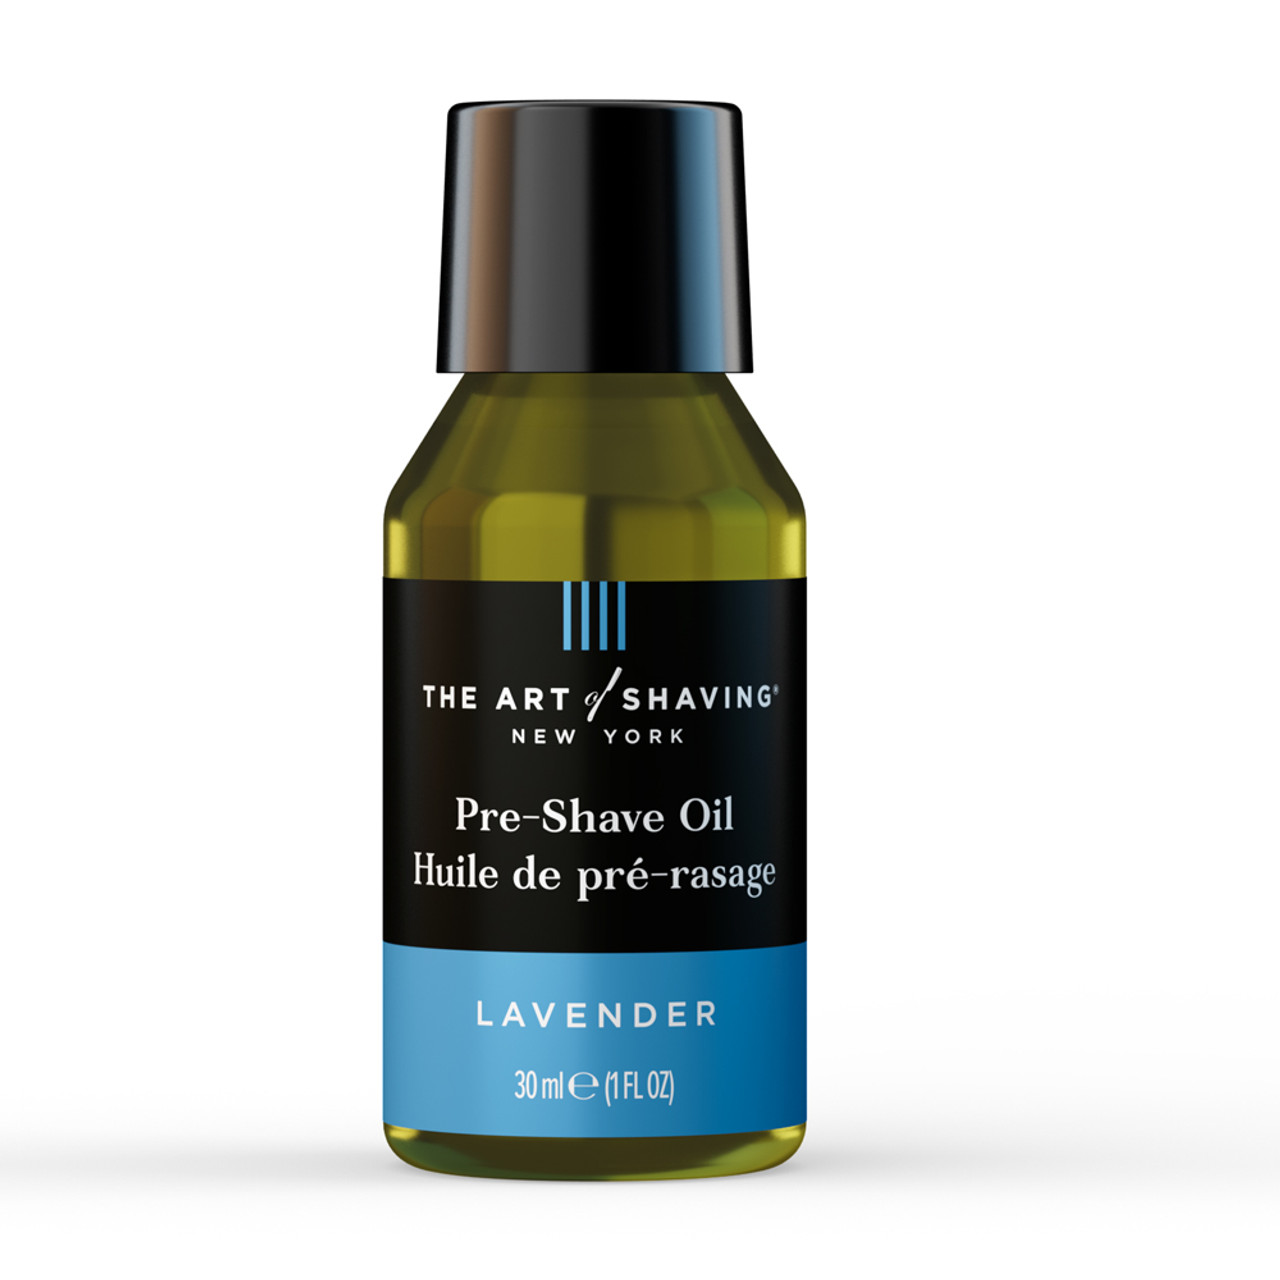 The Art of Shaving Pre-Shave Oil Travel Size Lavender